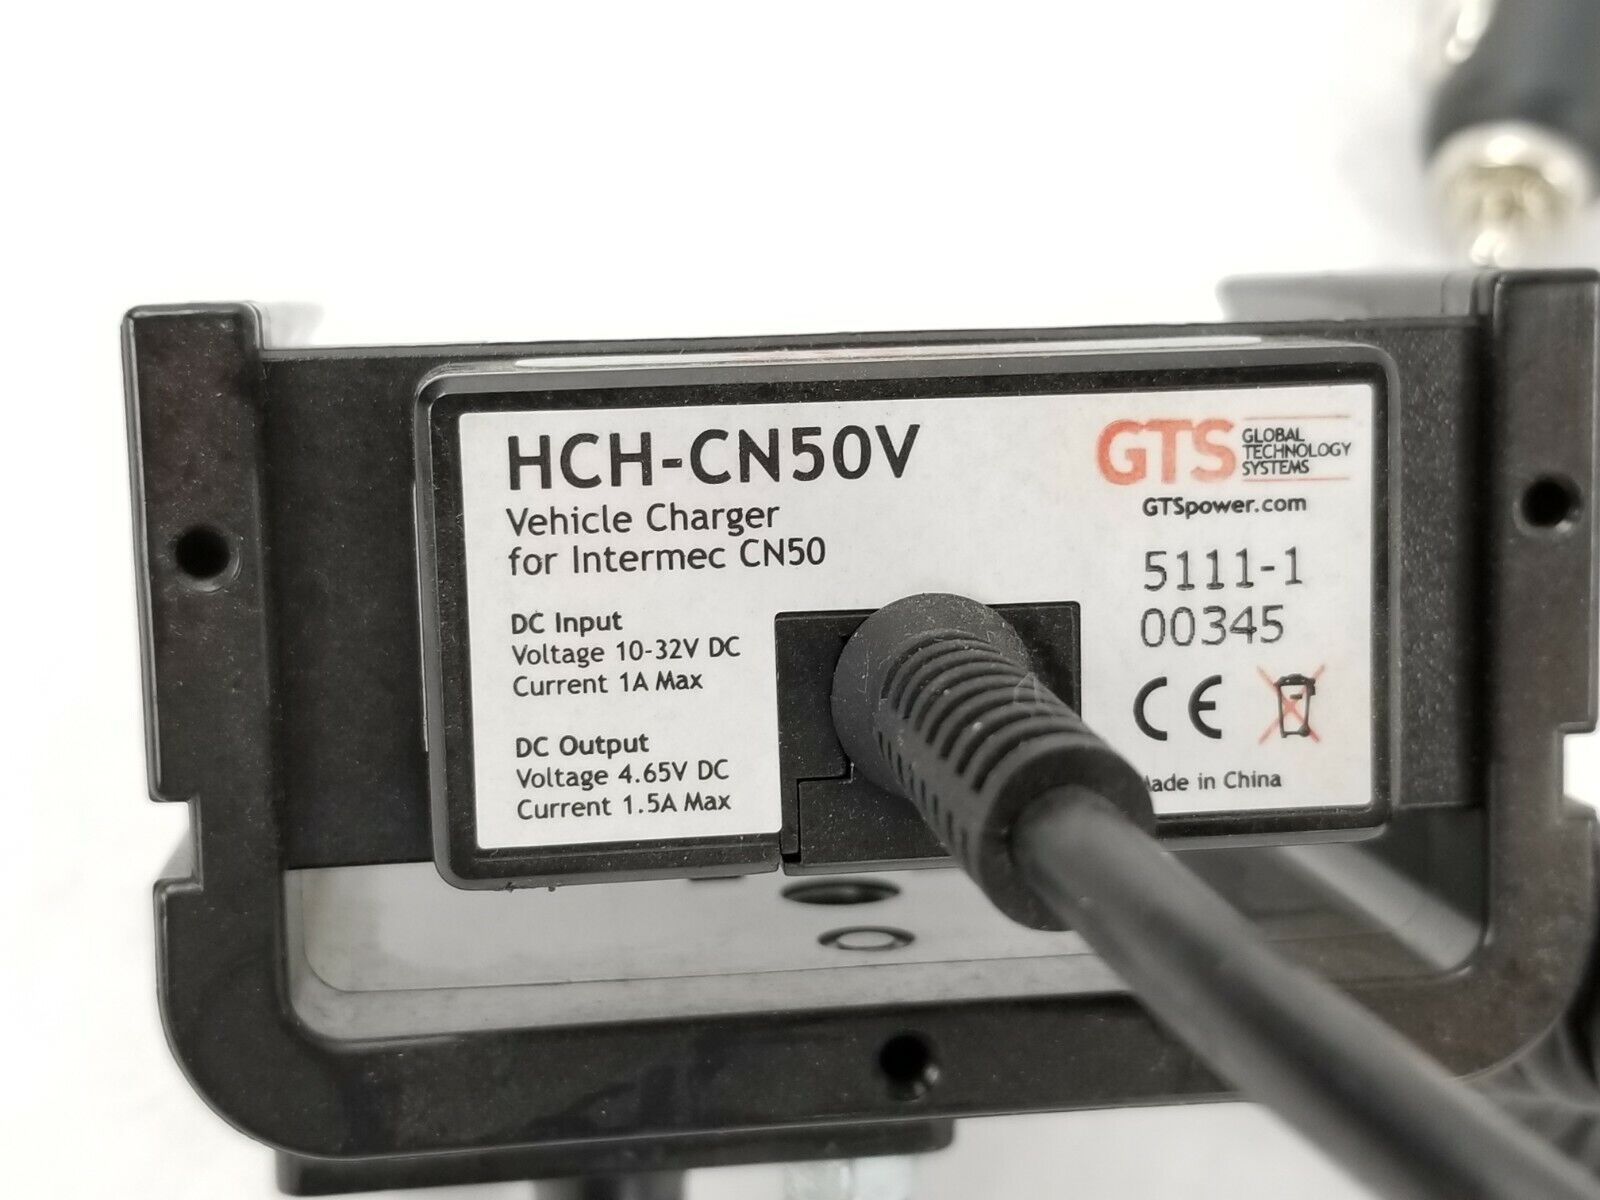 Intermec GTS HCH-CN50V Vehicle Charger for Intermec CN50/CN51 Series Scanners